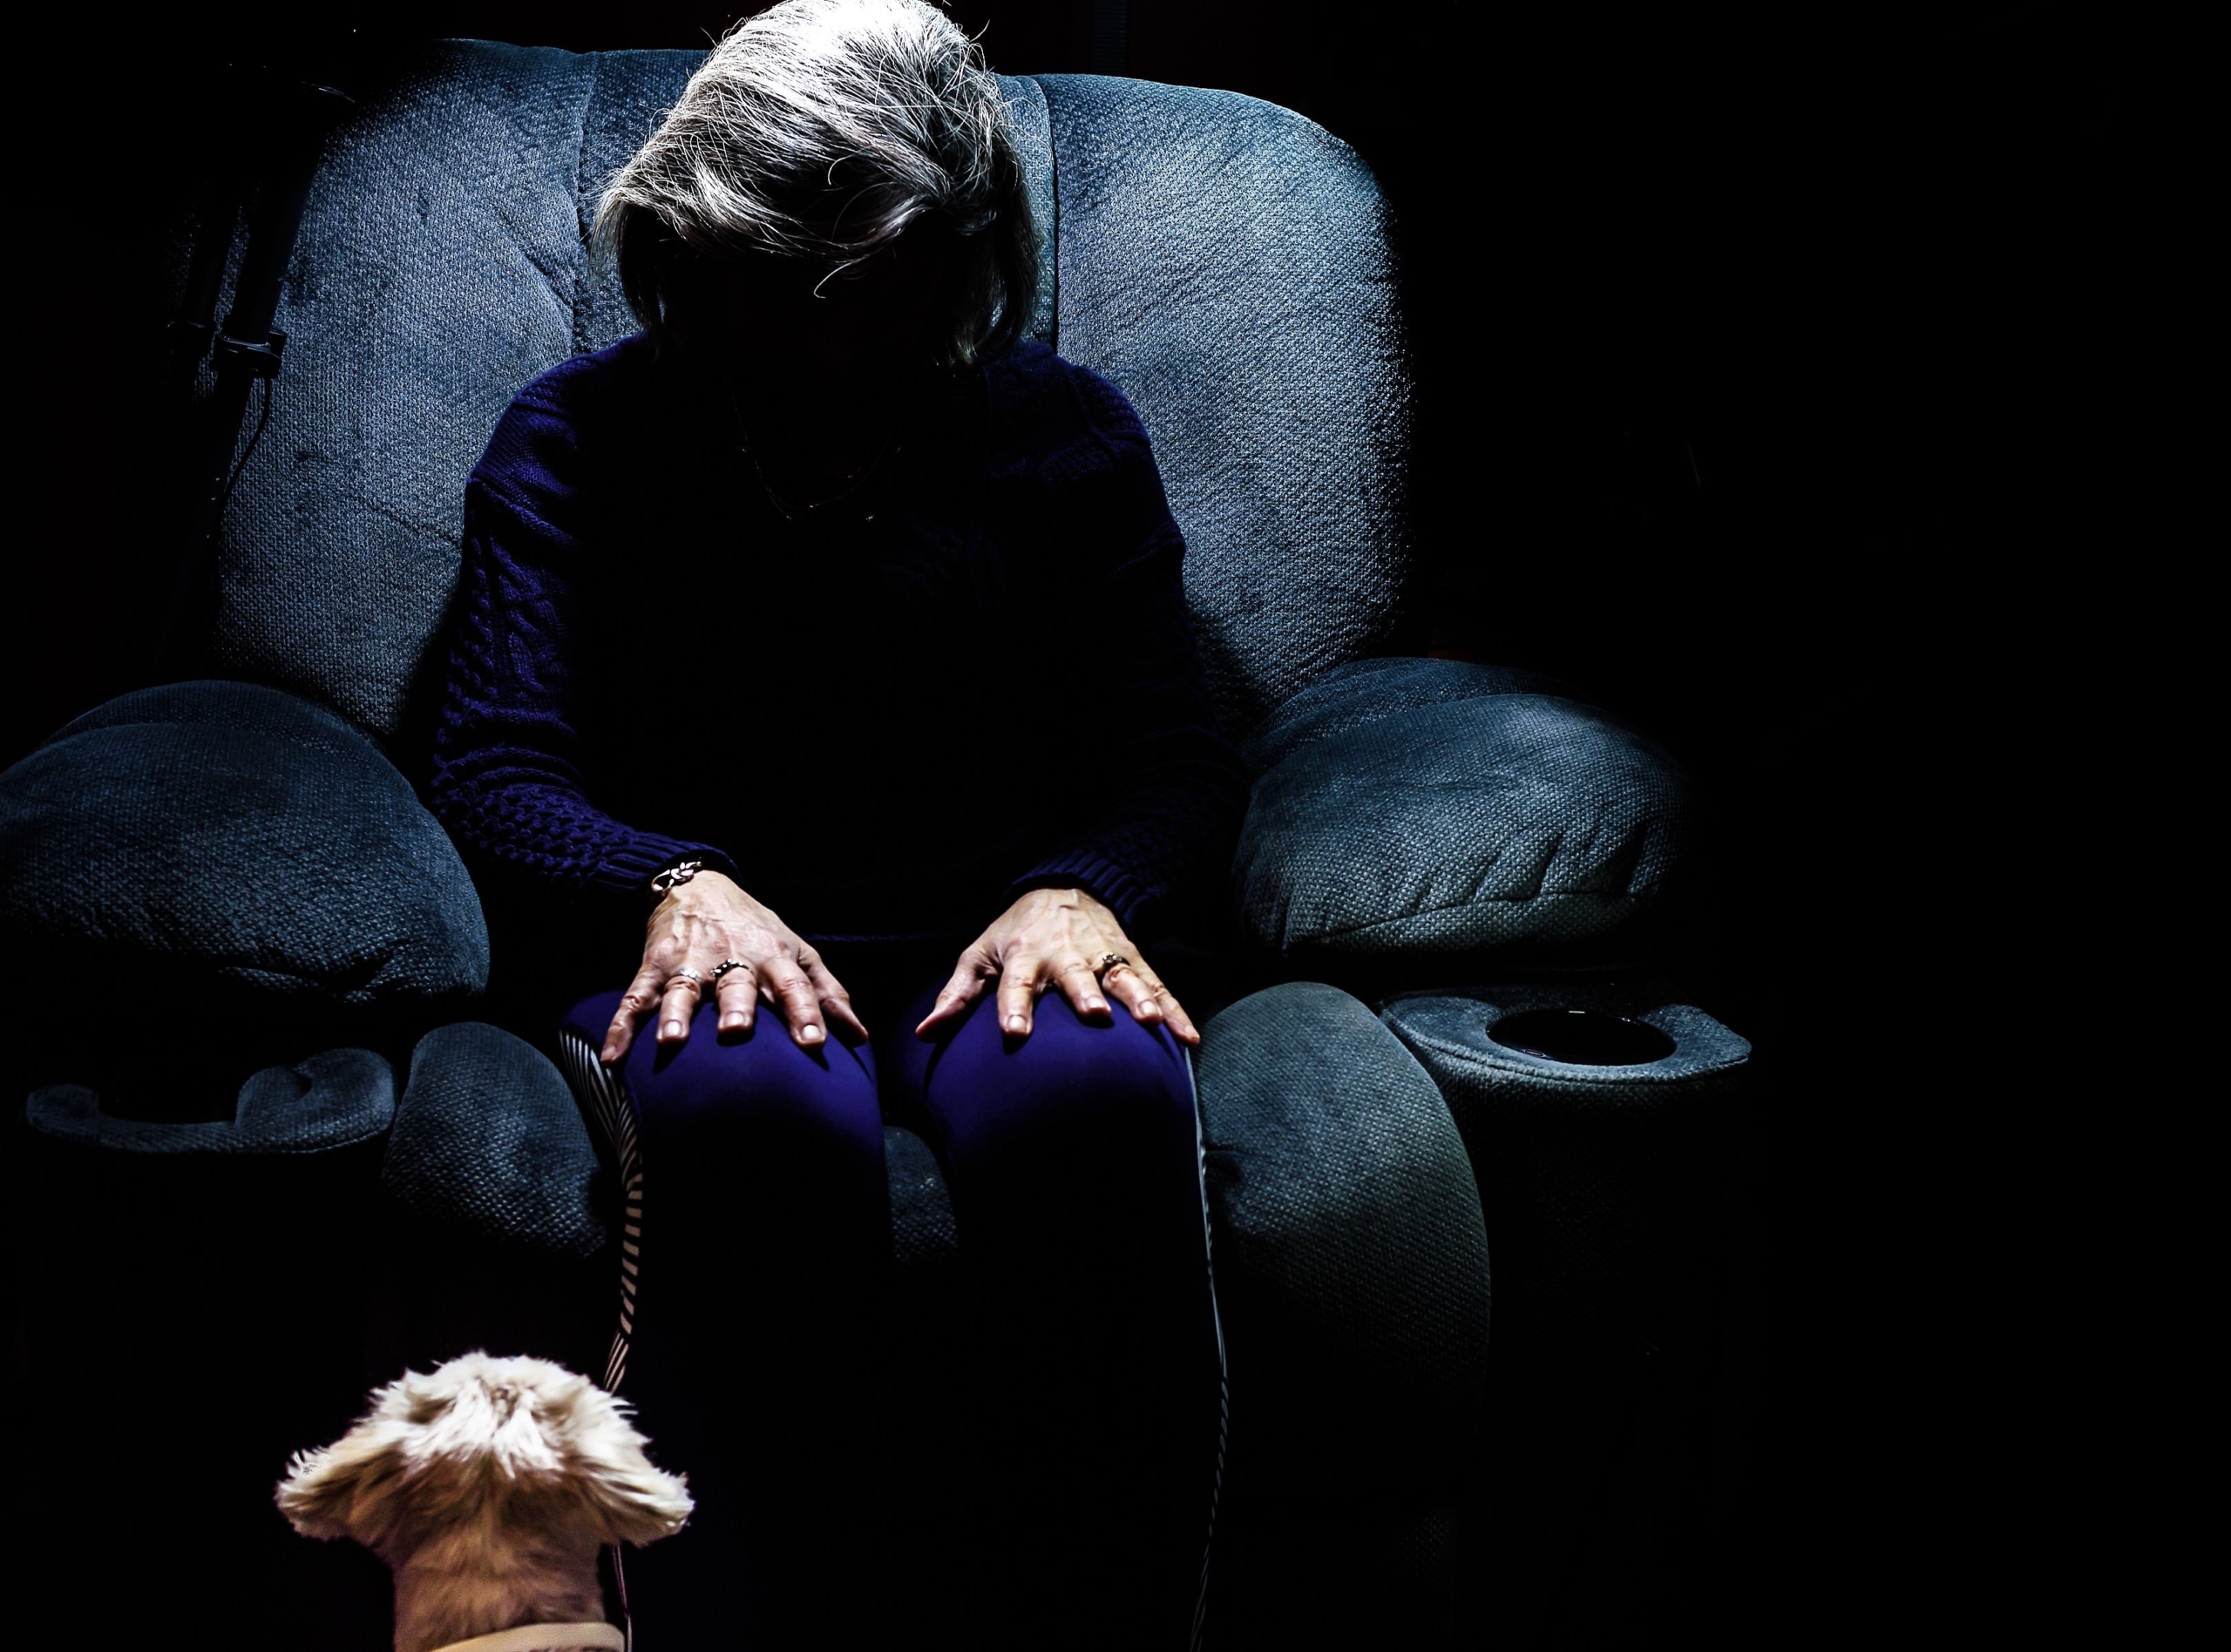 elderly woman sitting alone in the dark